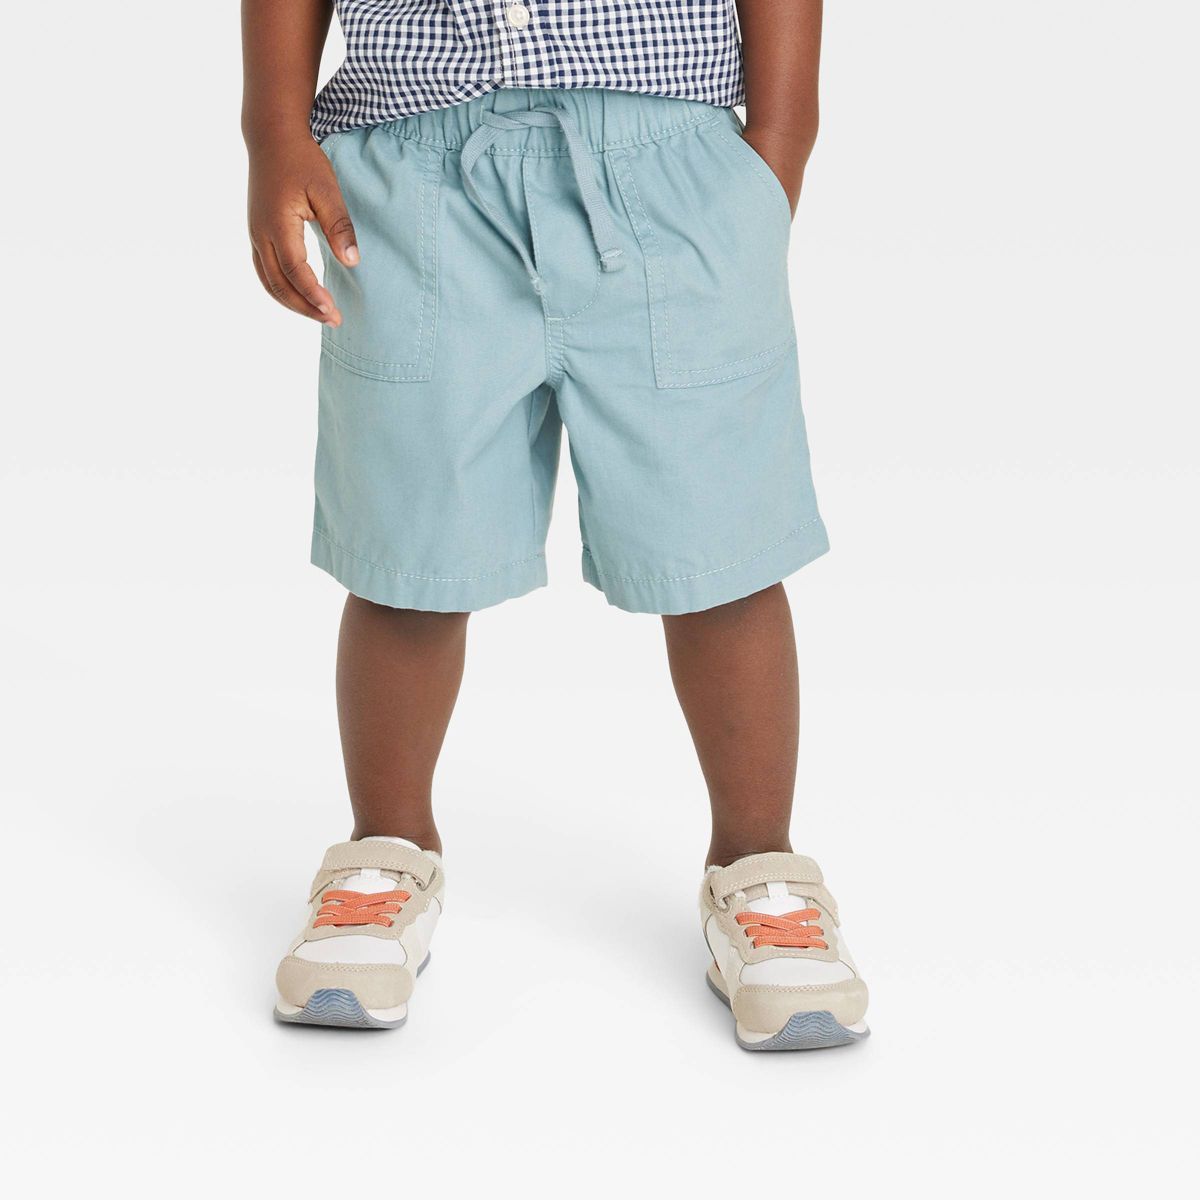 OshKosh B'gosh Toddler Boys' Solid Woven Pull-On Shorts - Teal Blue | Target